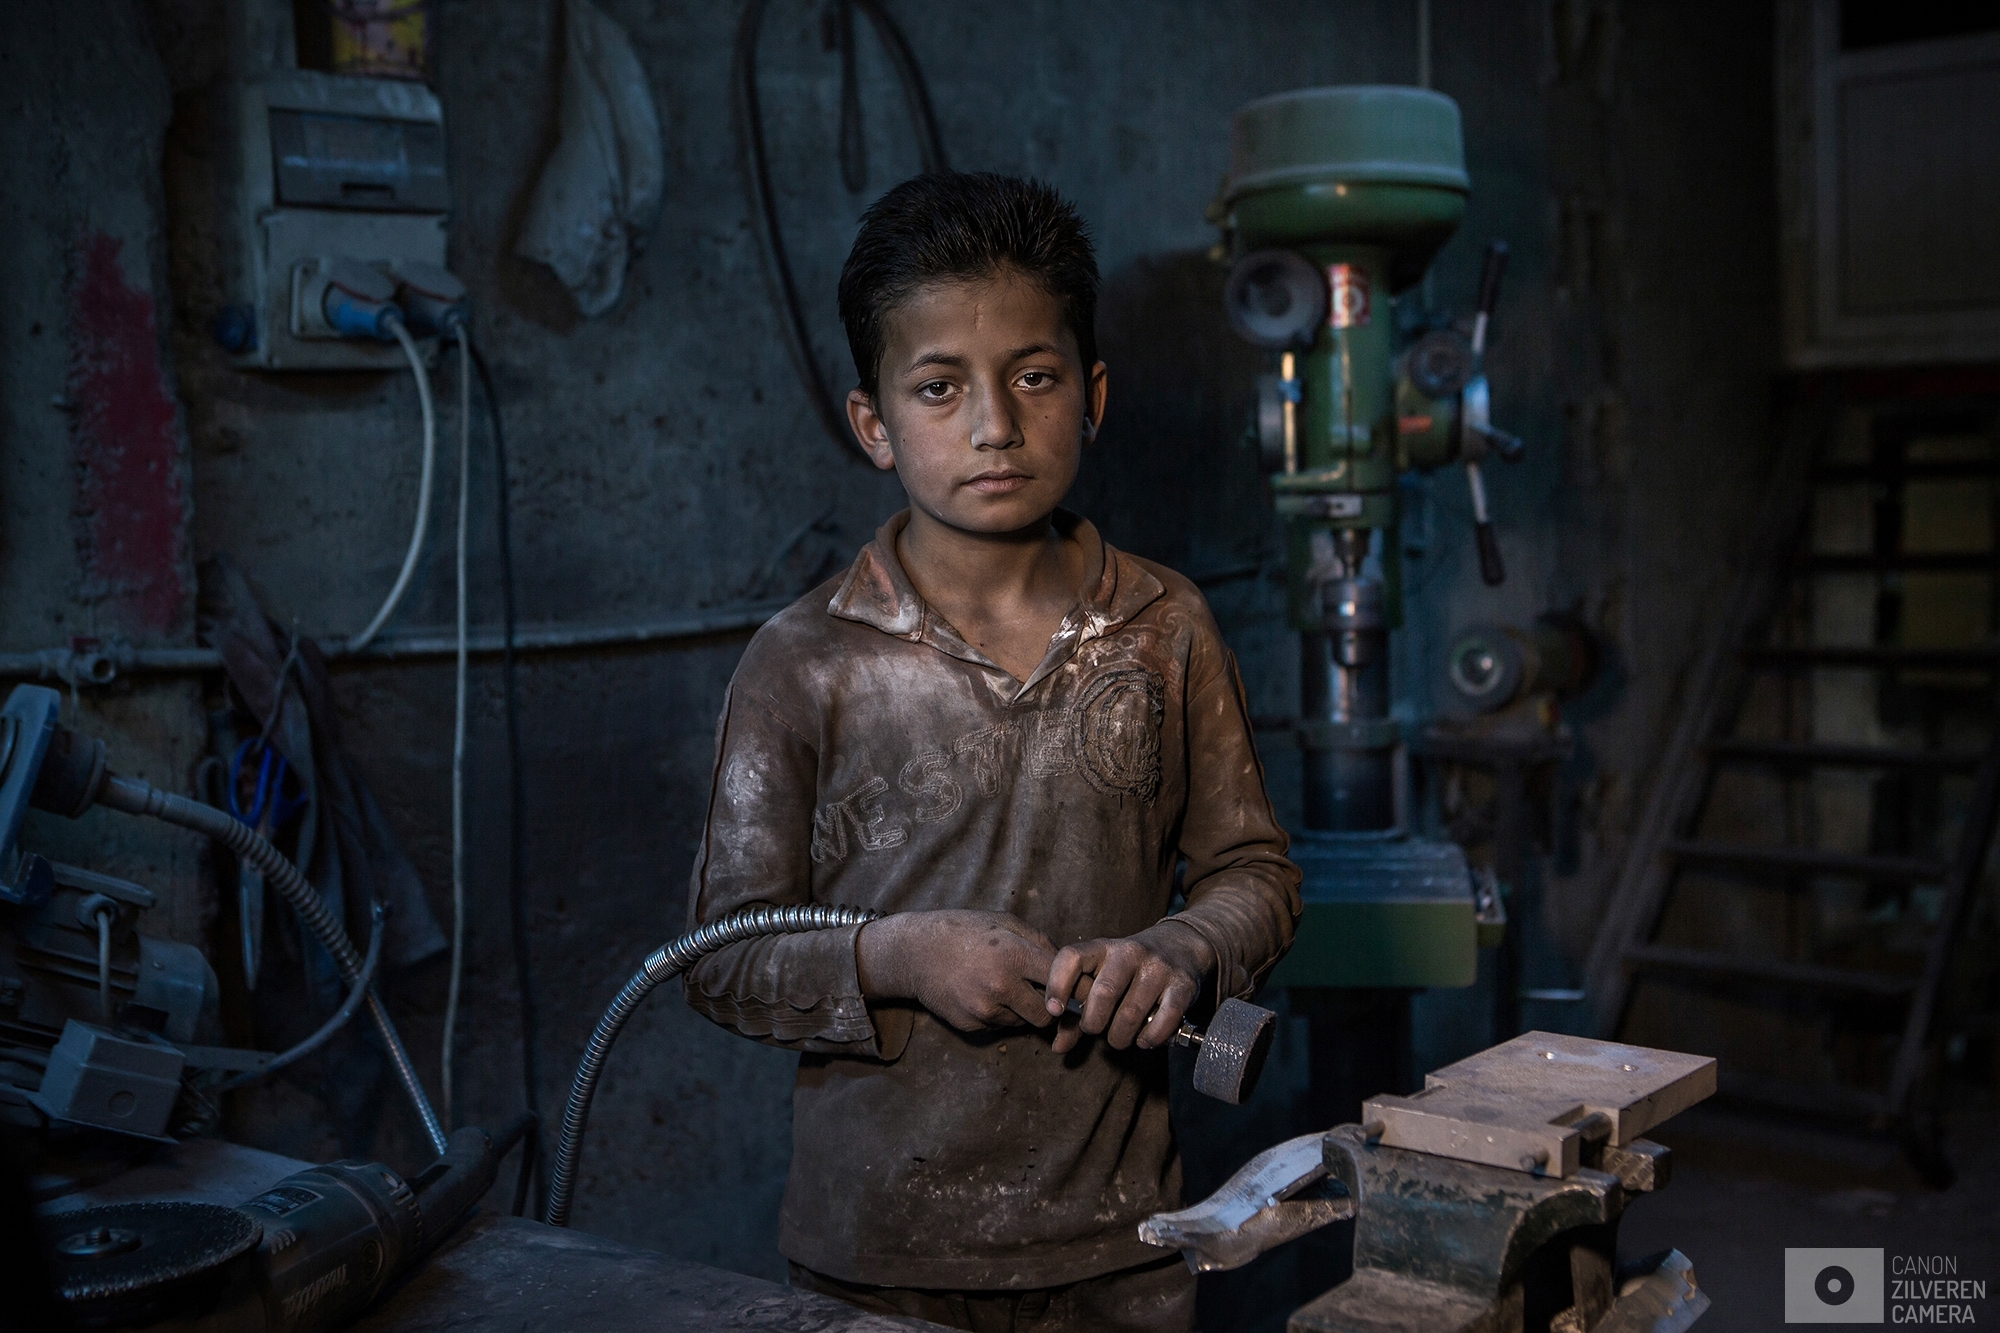 Syrian child labor